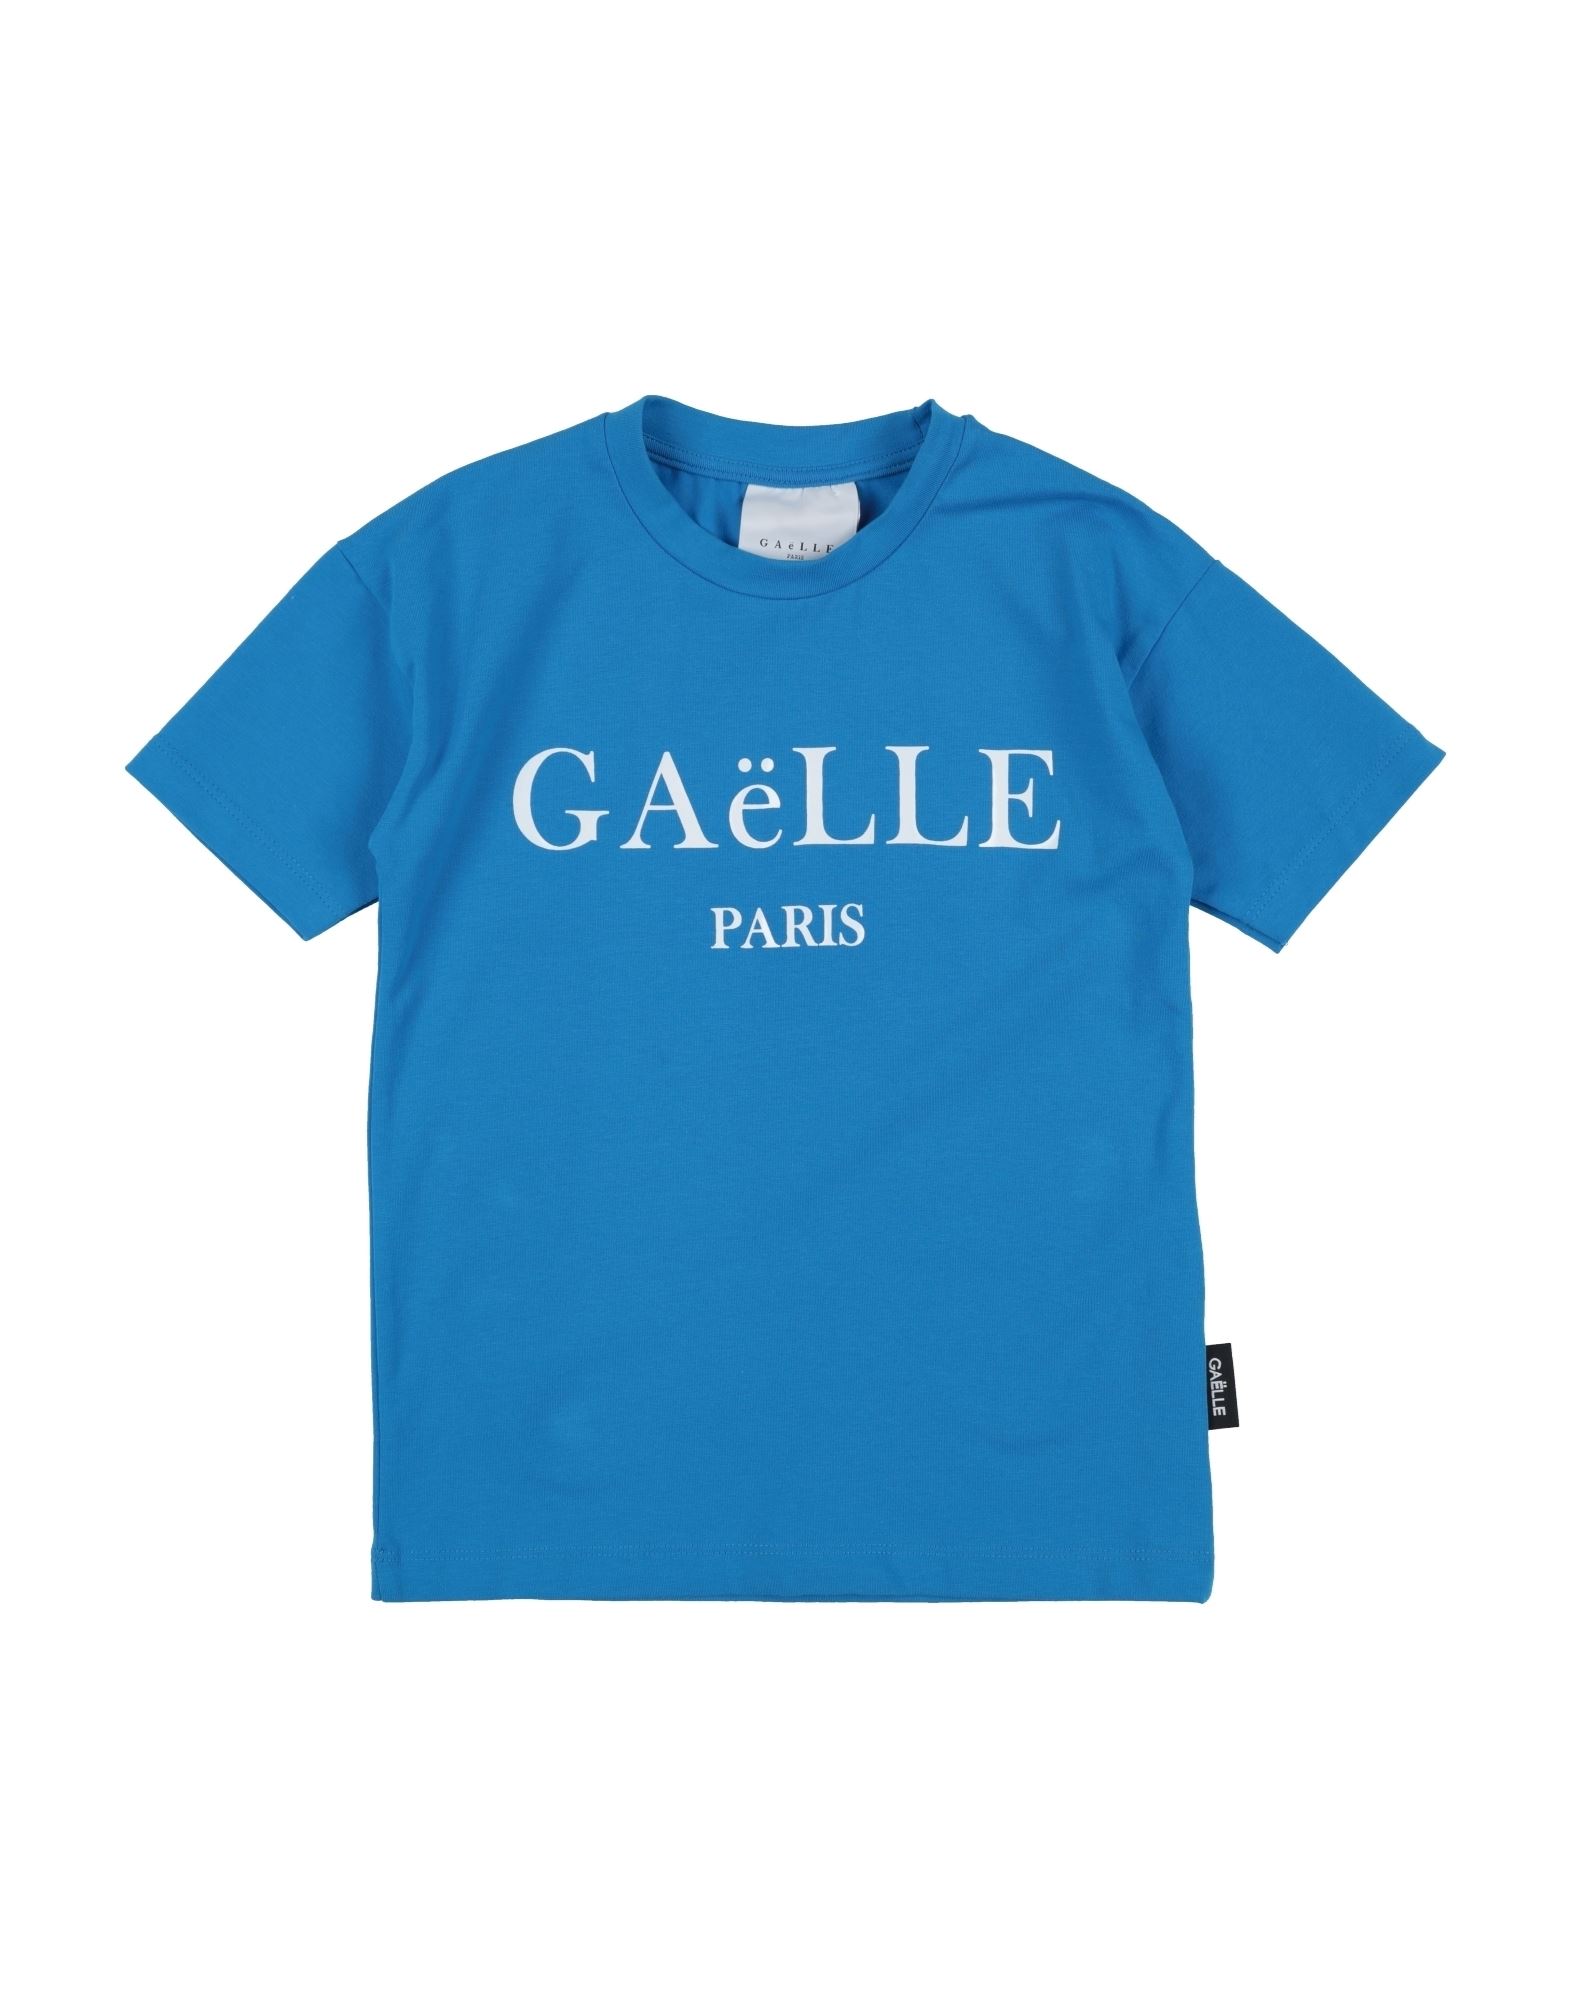 Gaelle Paris Kids' T-shirts In Azure